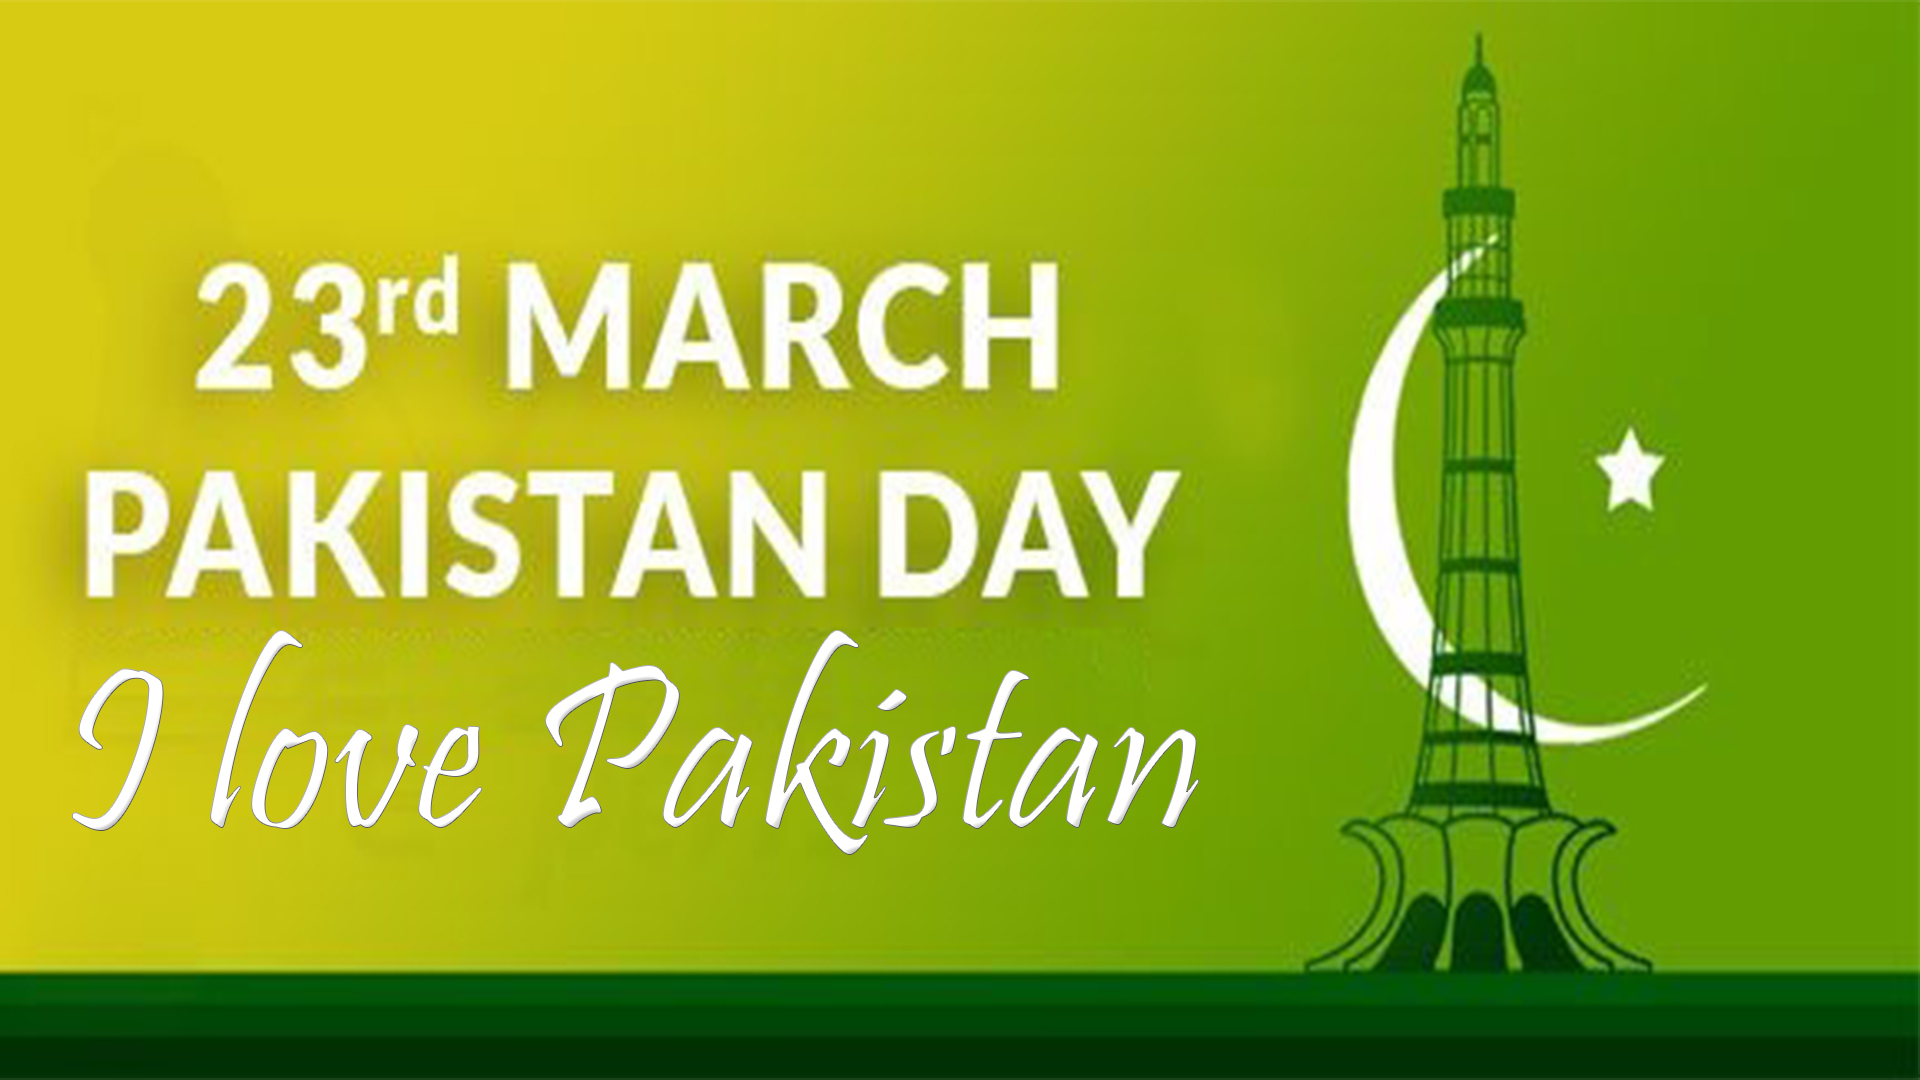 pakistan resolution day image